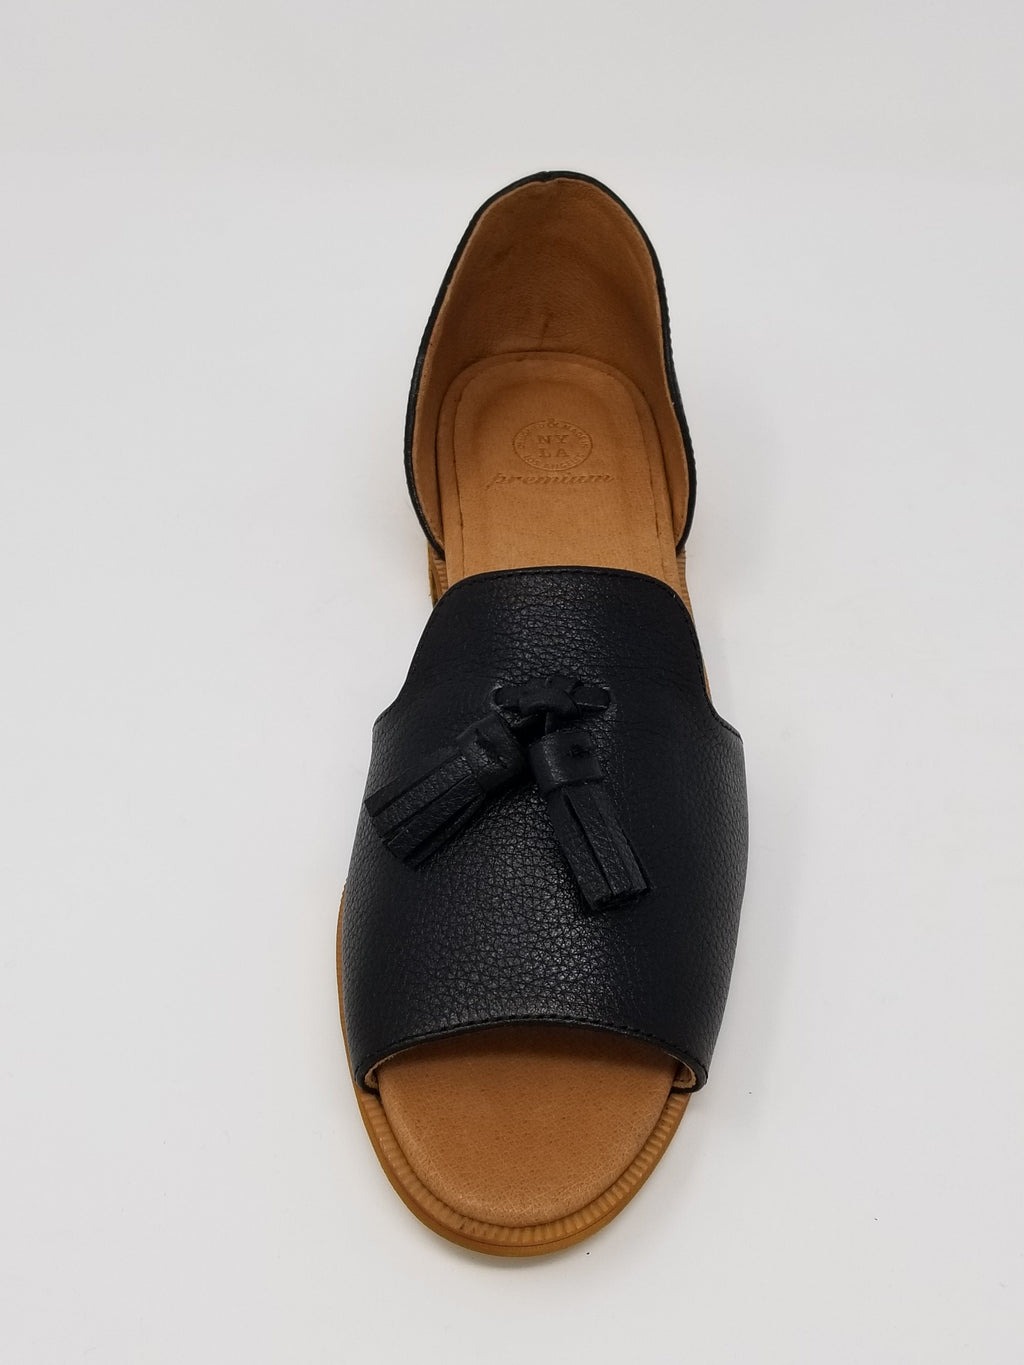 N.Y.L.A. SHOES FLATS N.Y.L.A. Shoes Westlake Women's Open Toe Tassel Loafer in Black or Cognac